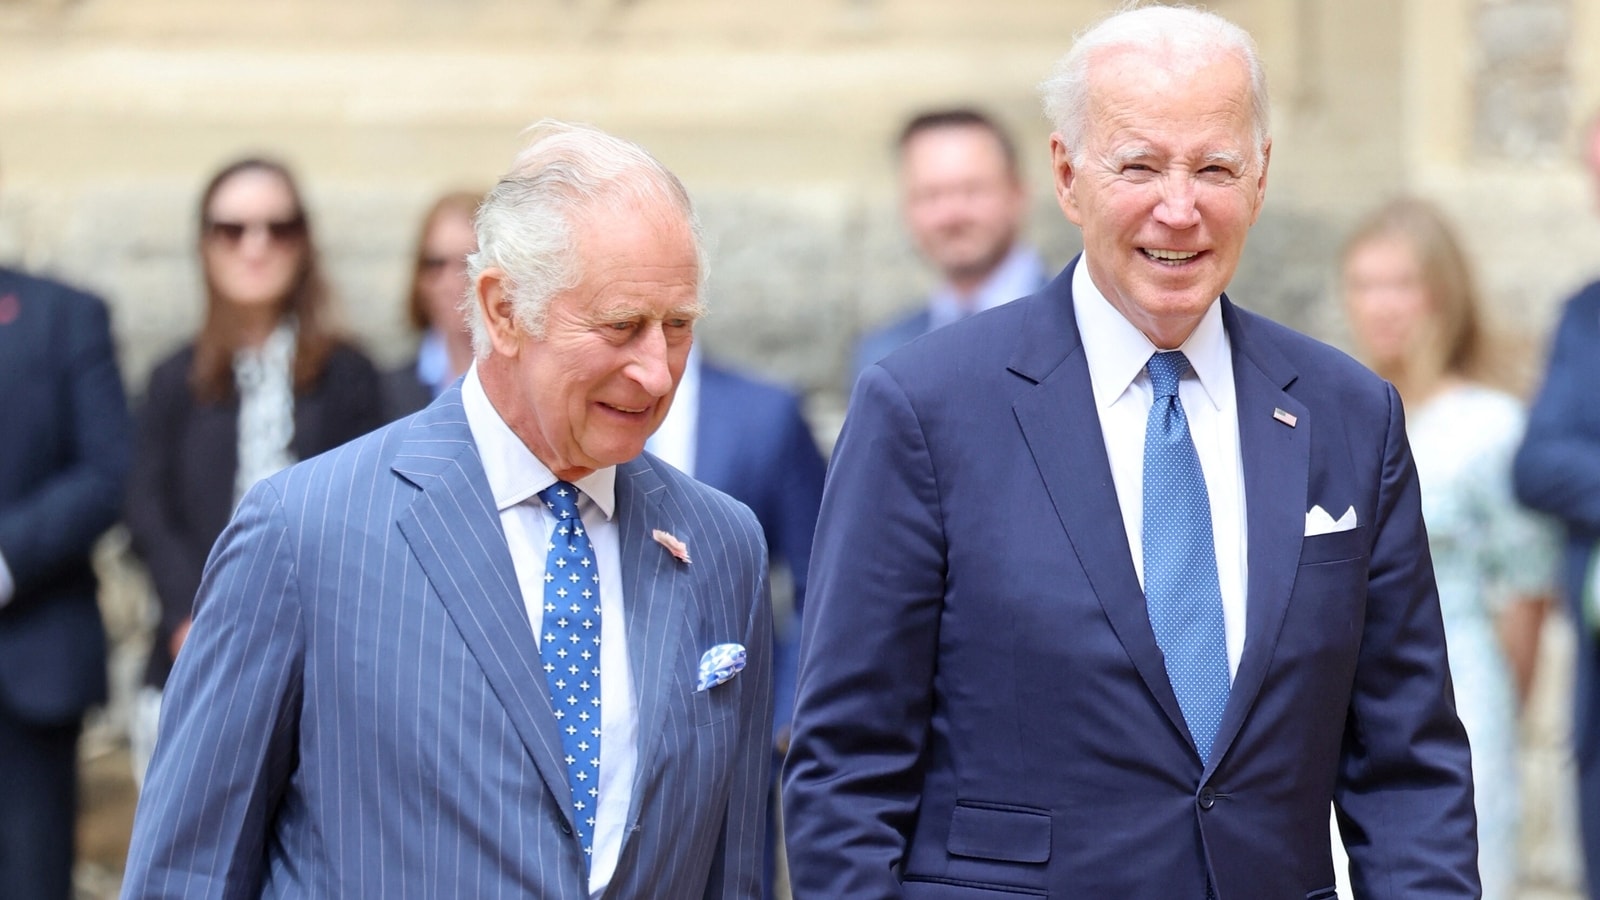 Joe Biden puts his hand on King Charles' back. So, royal protocol broken?